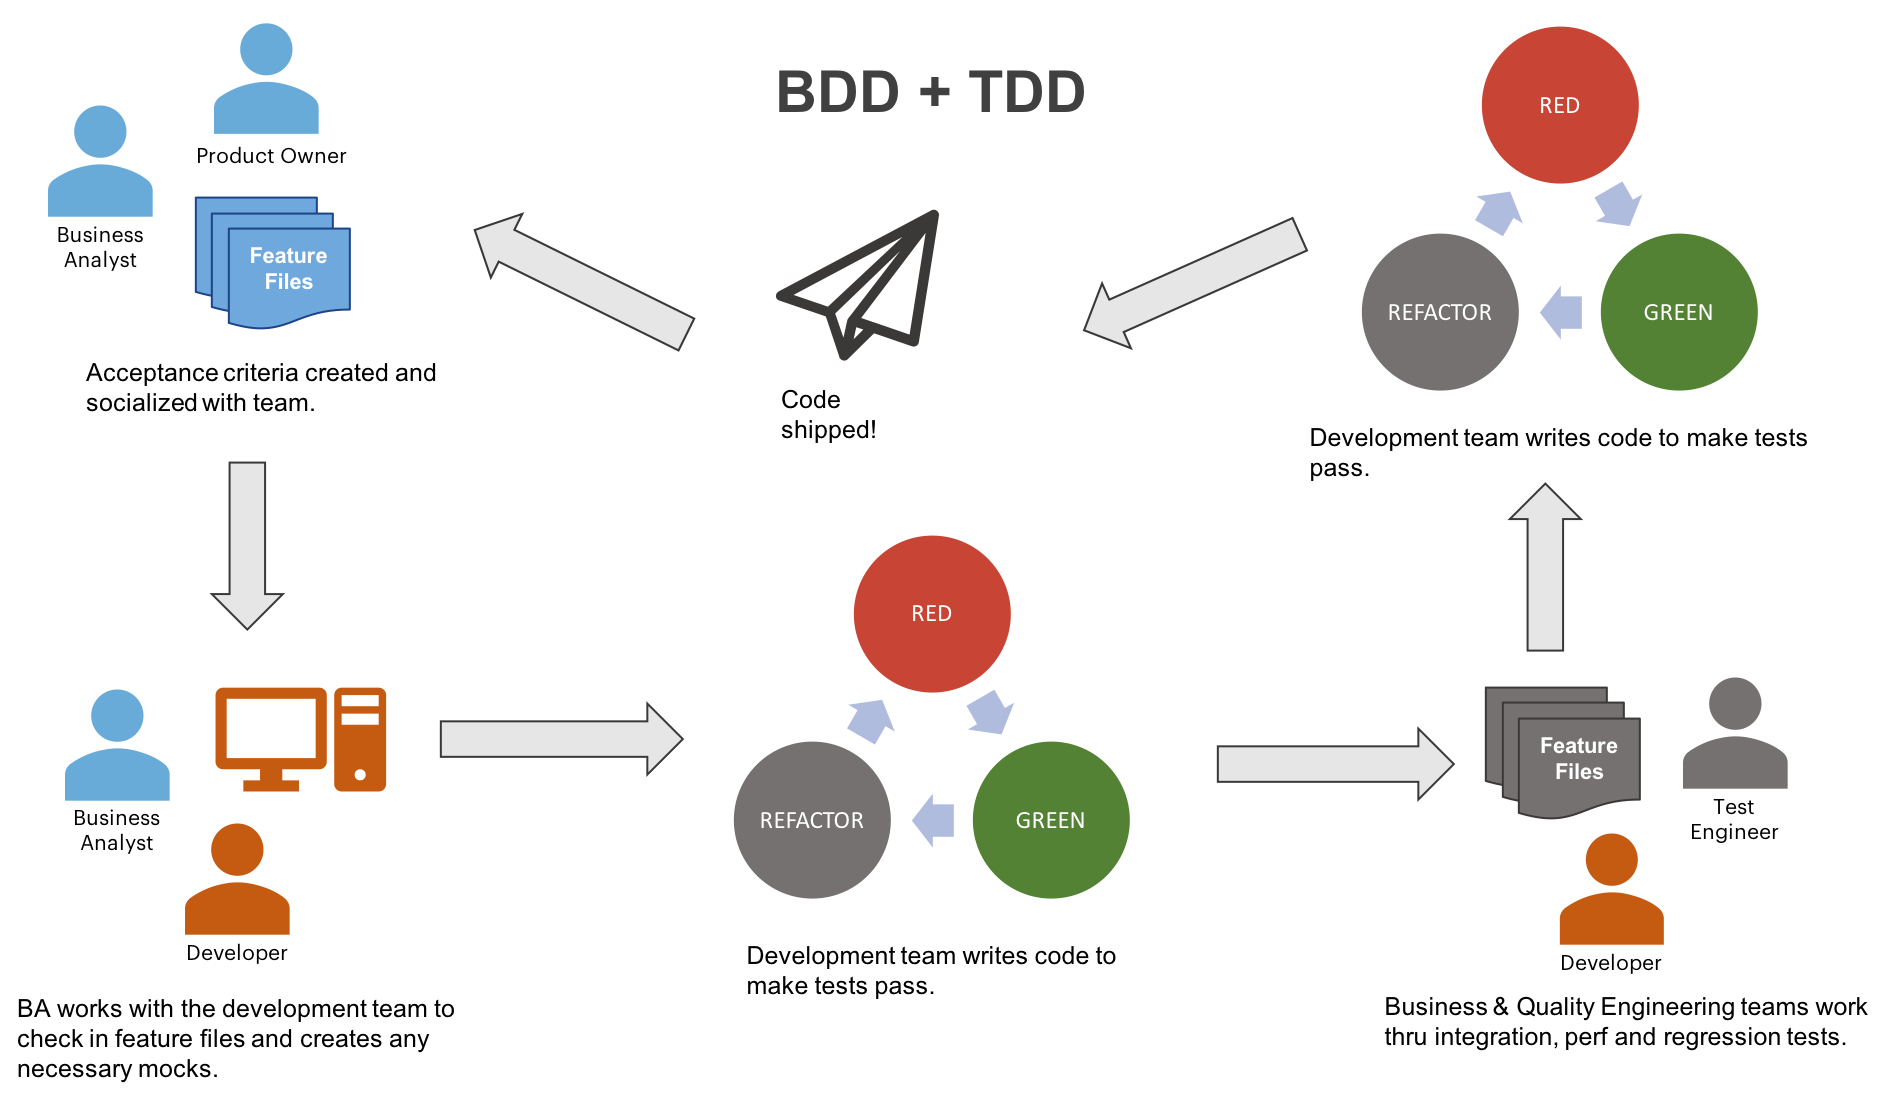 The BDD + TDD Workflow